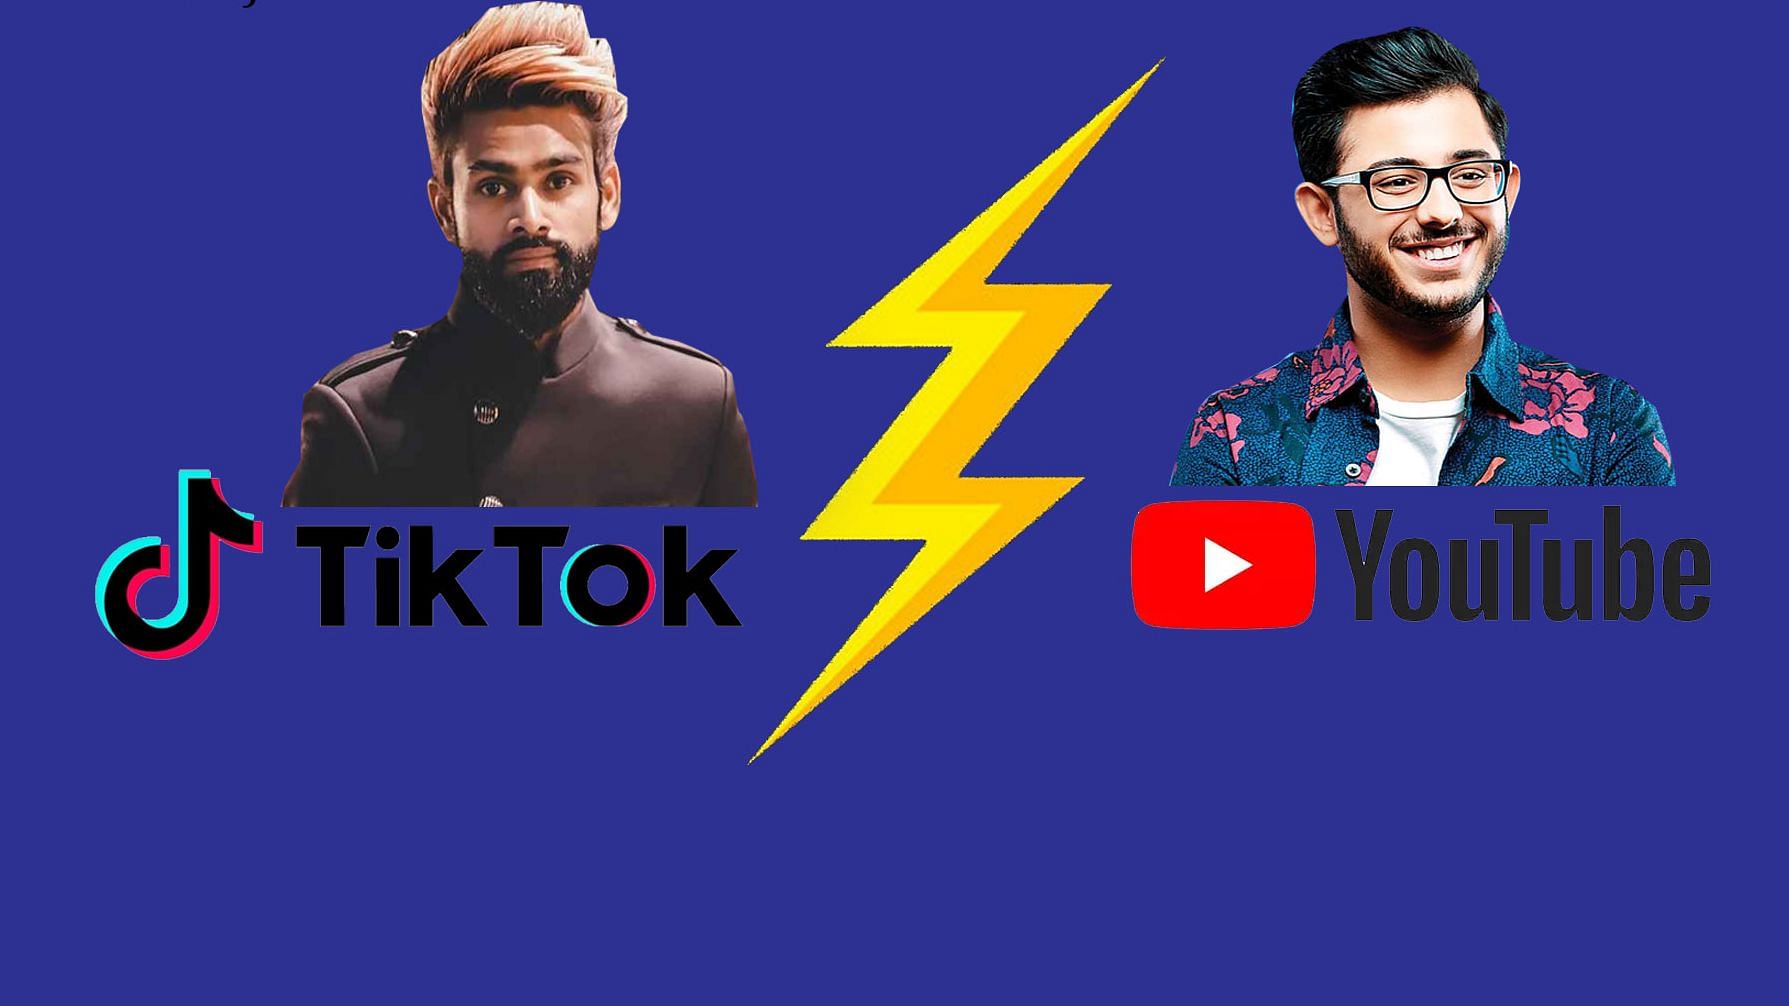 YouTube vs TikTok Explained